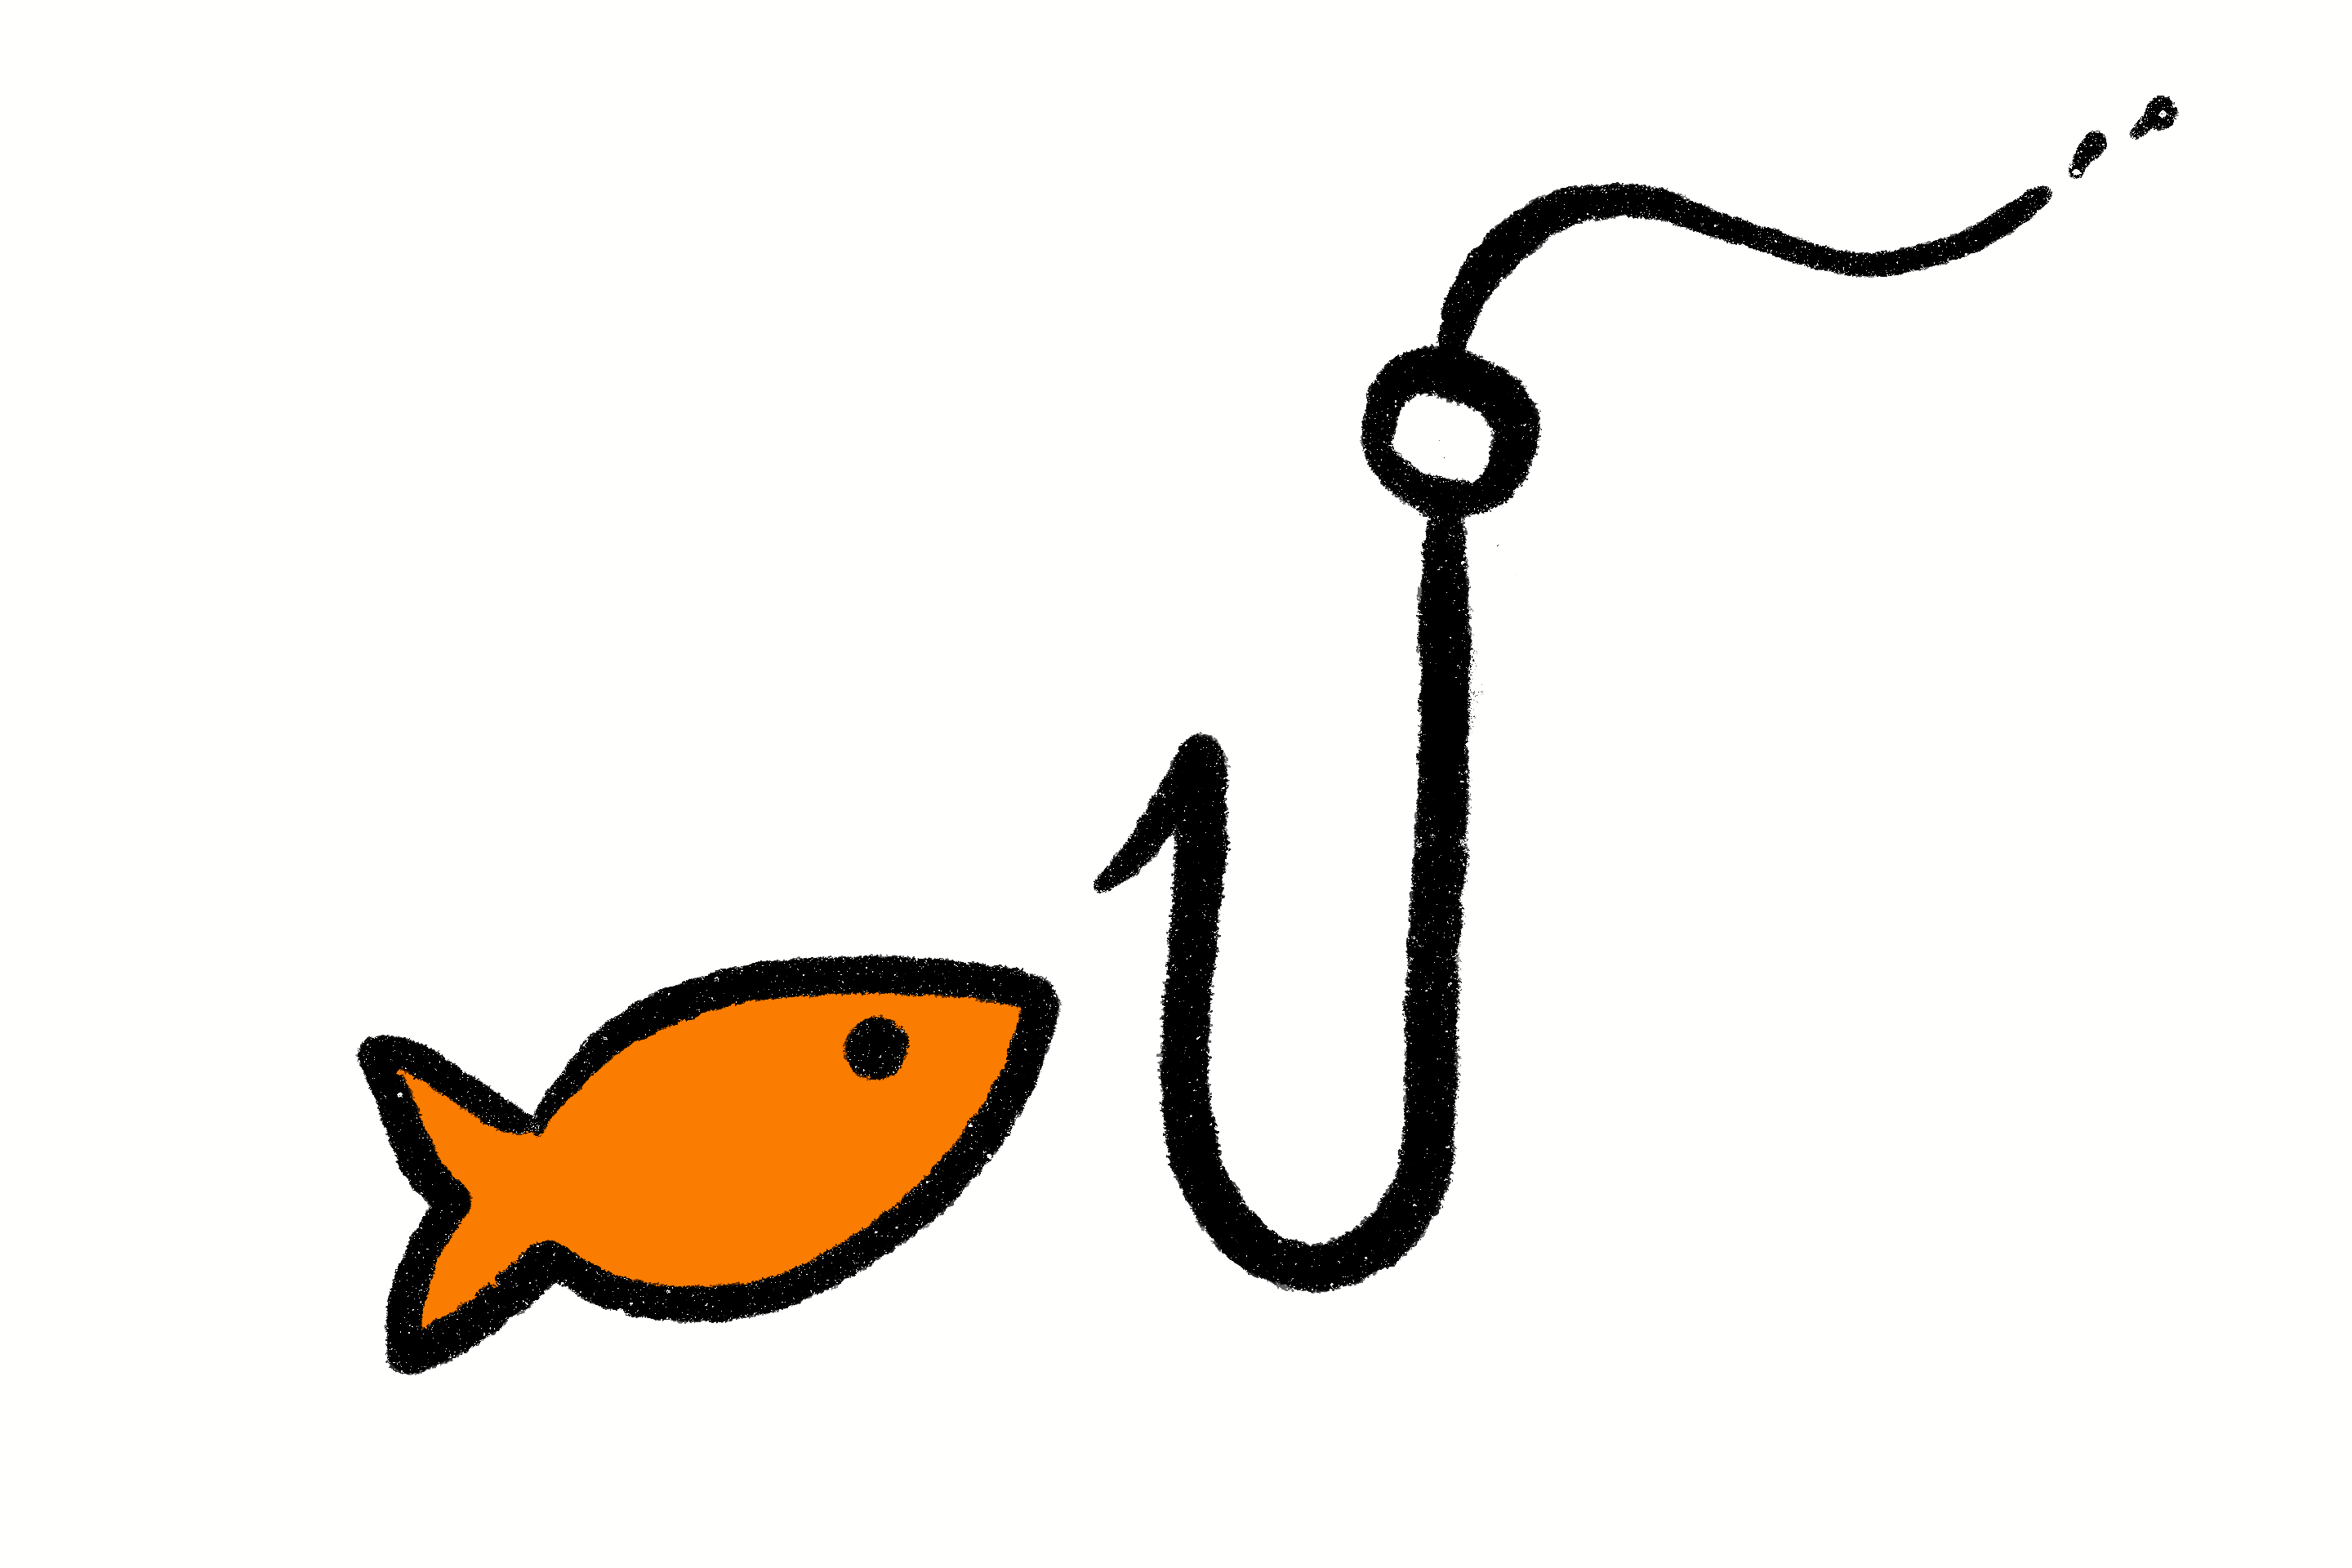 Orange fish staring at a fish hook.